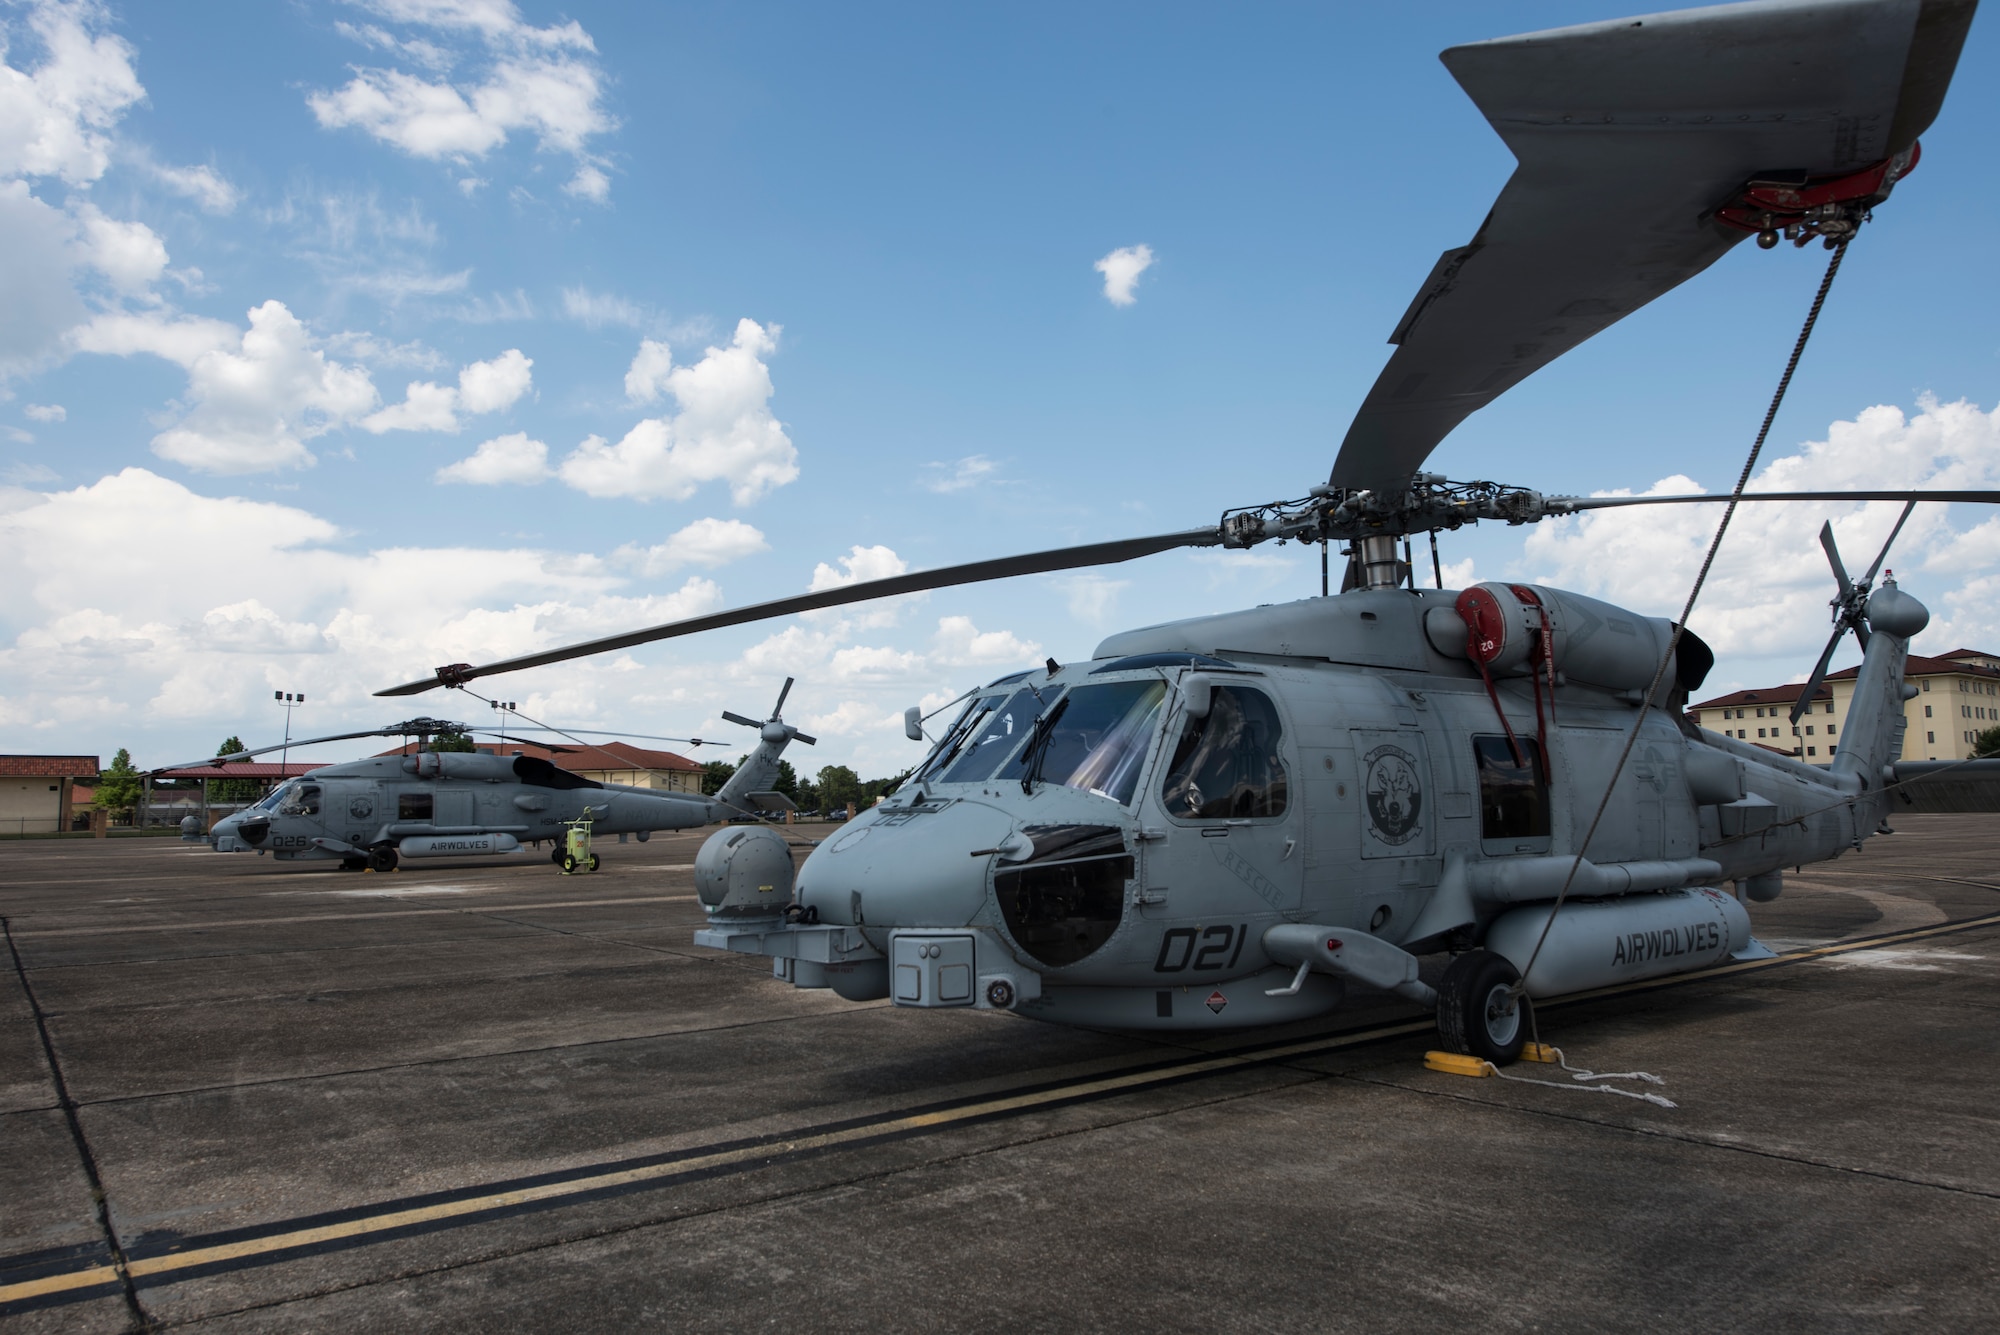 MH-60 R Seahawk aircraft on the flightline